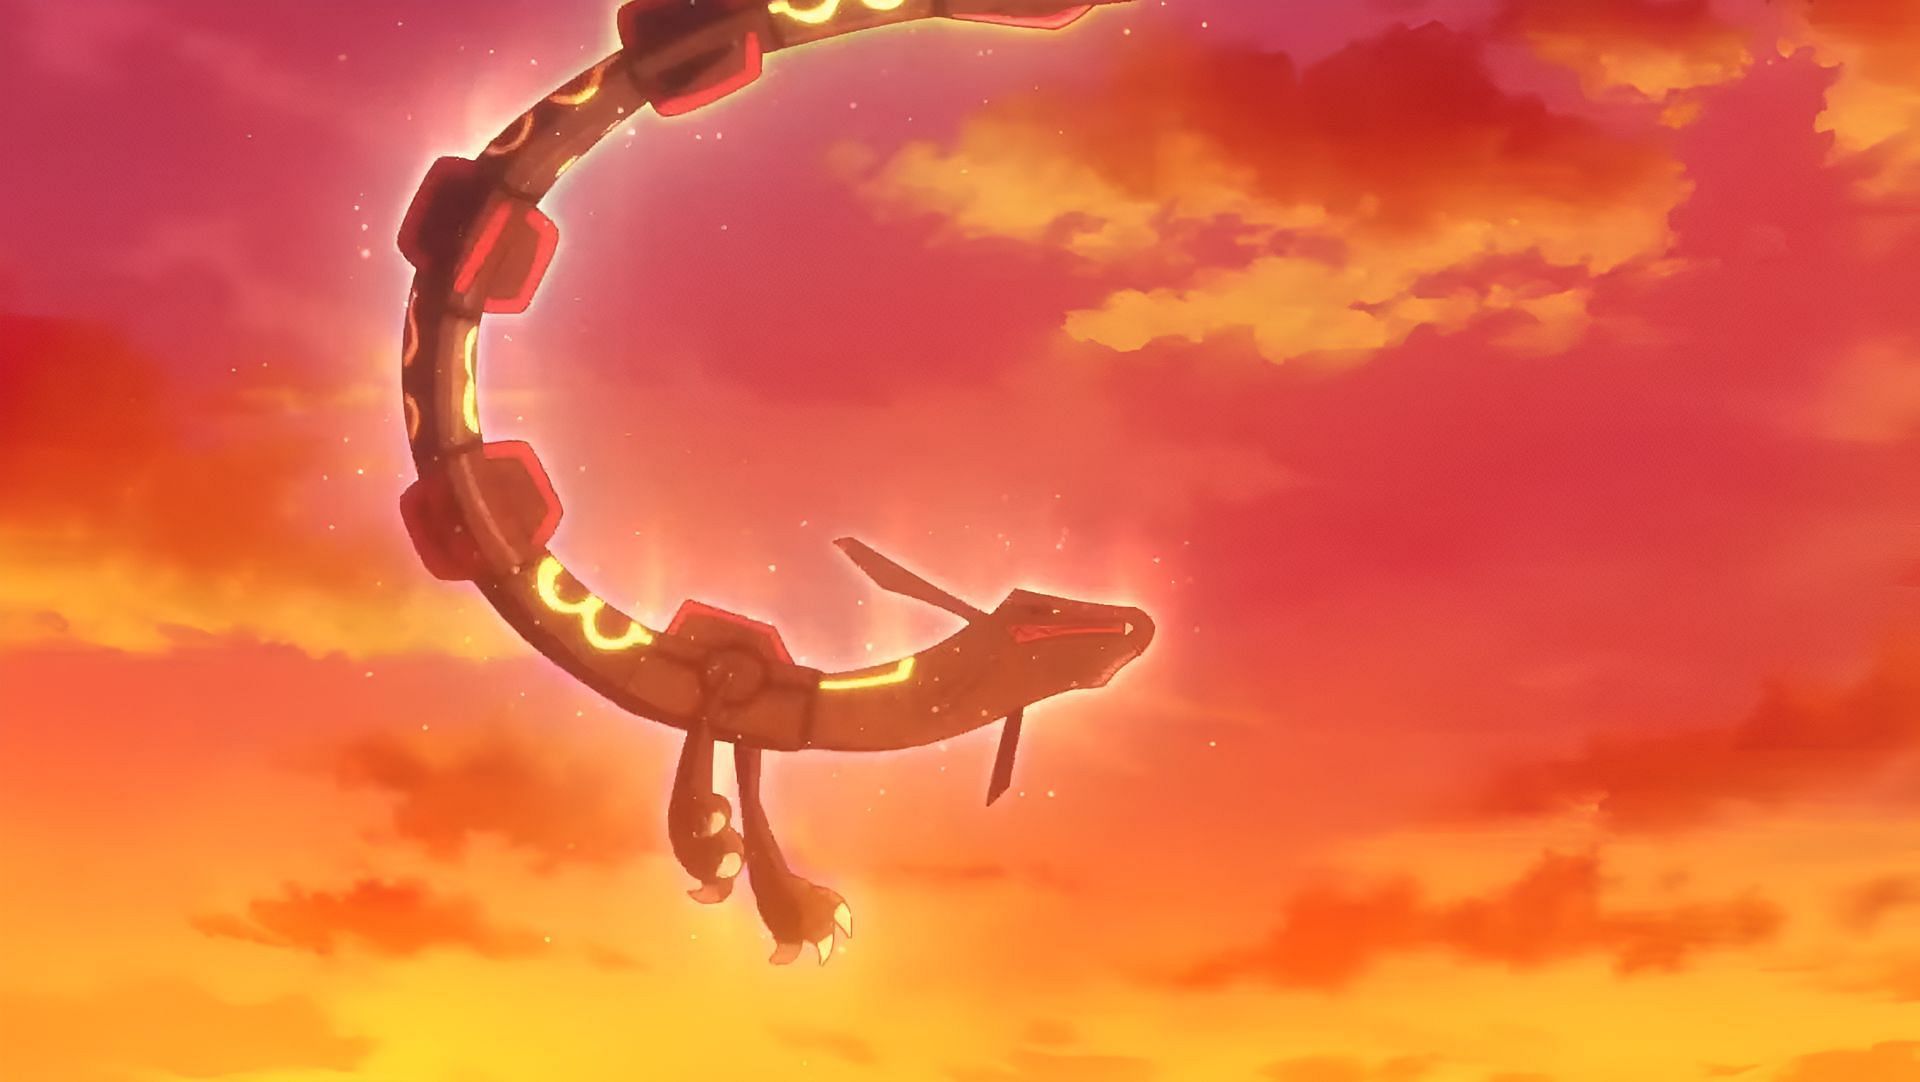 The Black Rayquaza roams the skies in Pokemon Horizons Episode 33 (Image via The Pokemon Company)